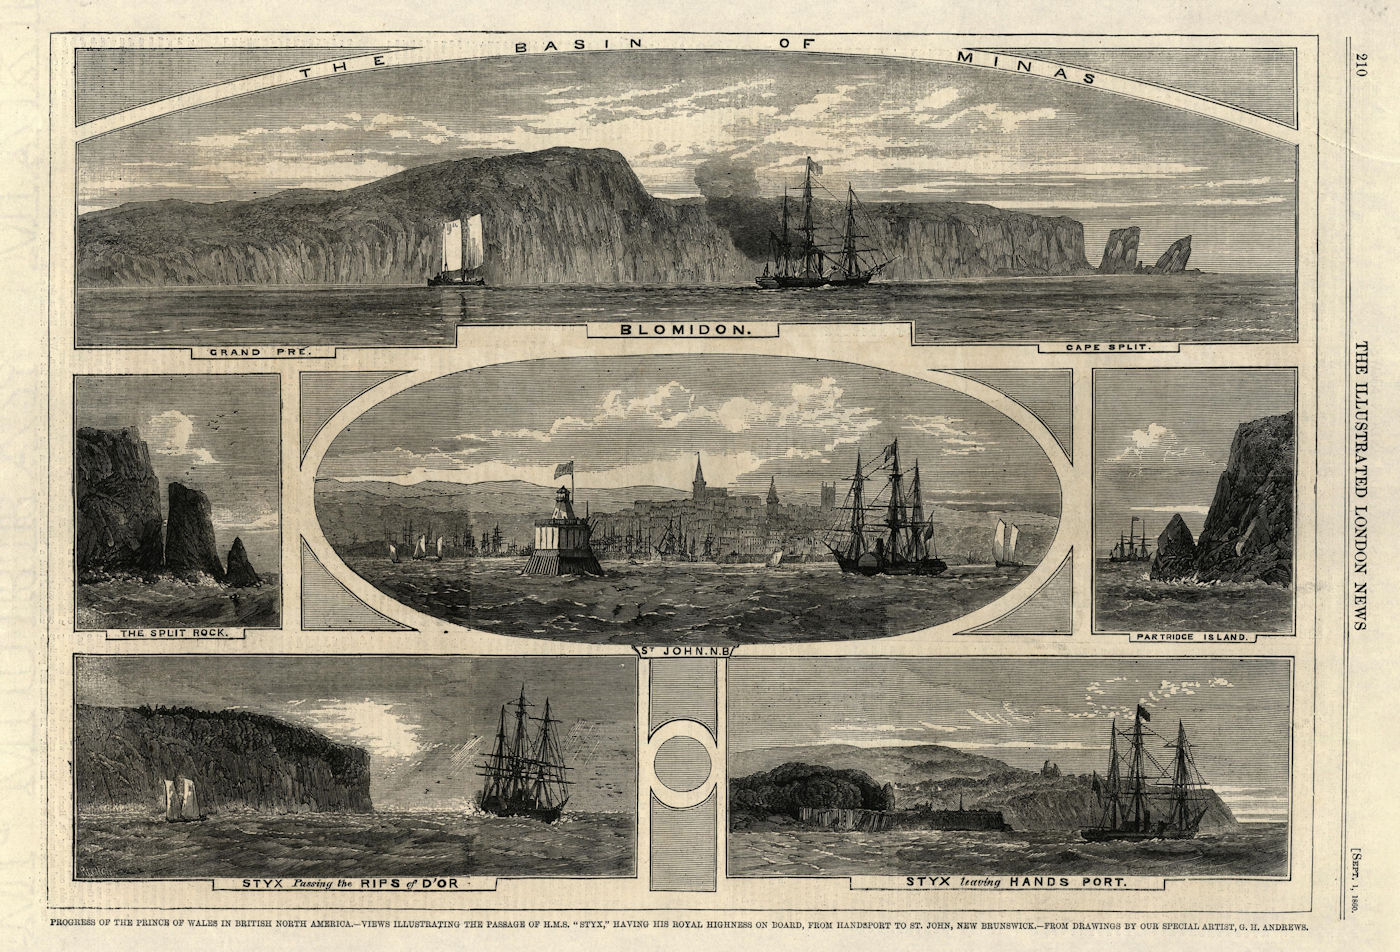 Associate Product HMS Styx voyage. Minas Basin. Hantsport-St. John, New Brunswick. Canada 1860